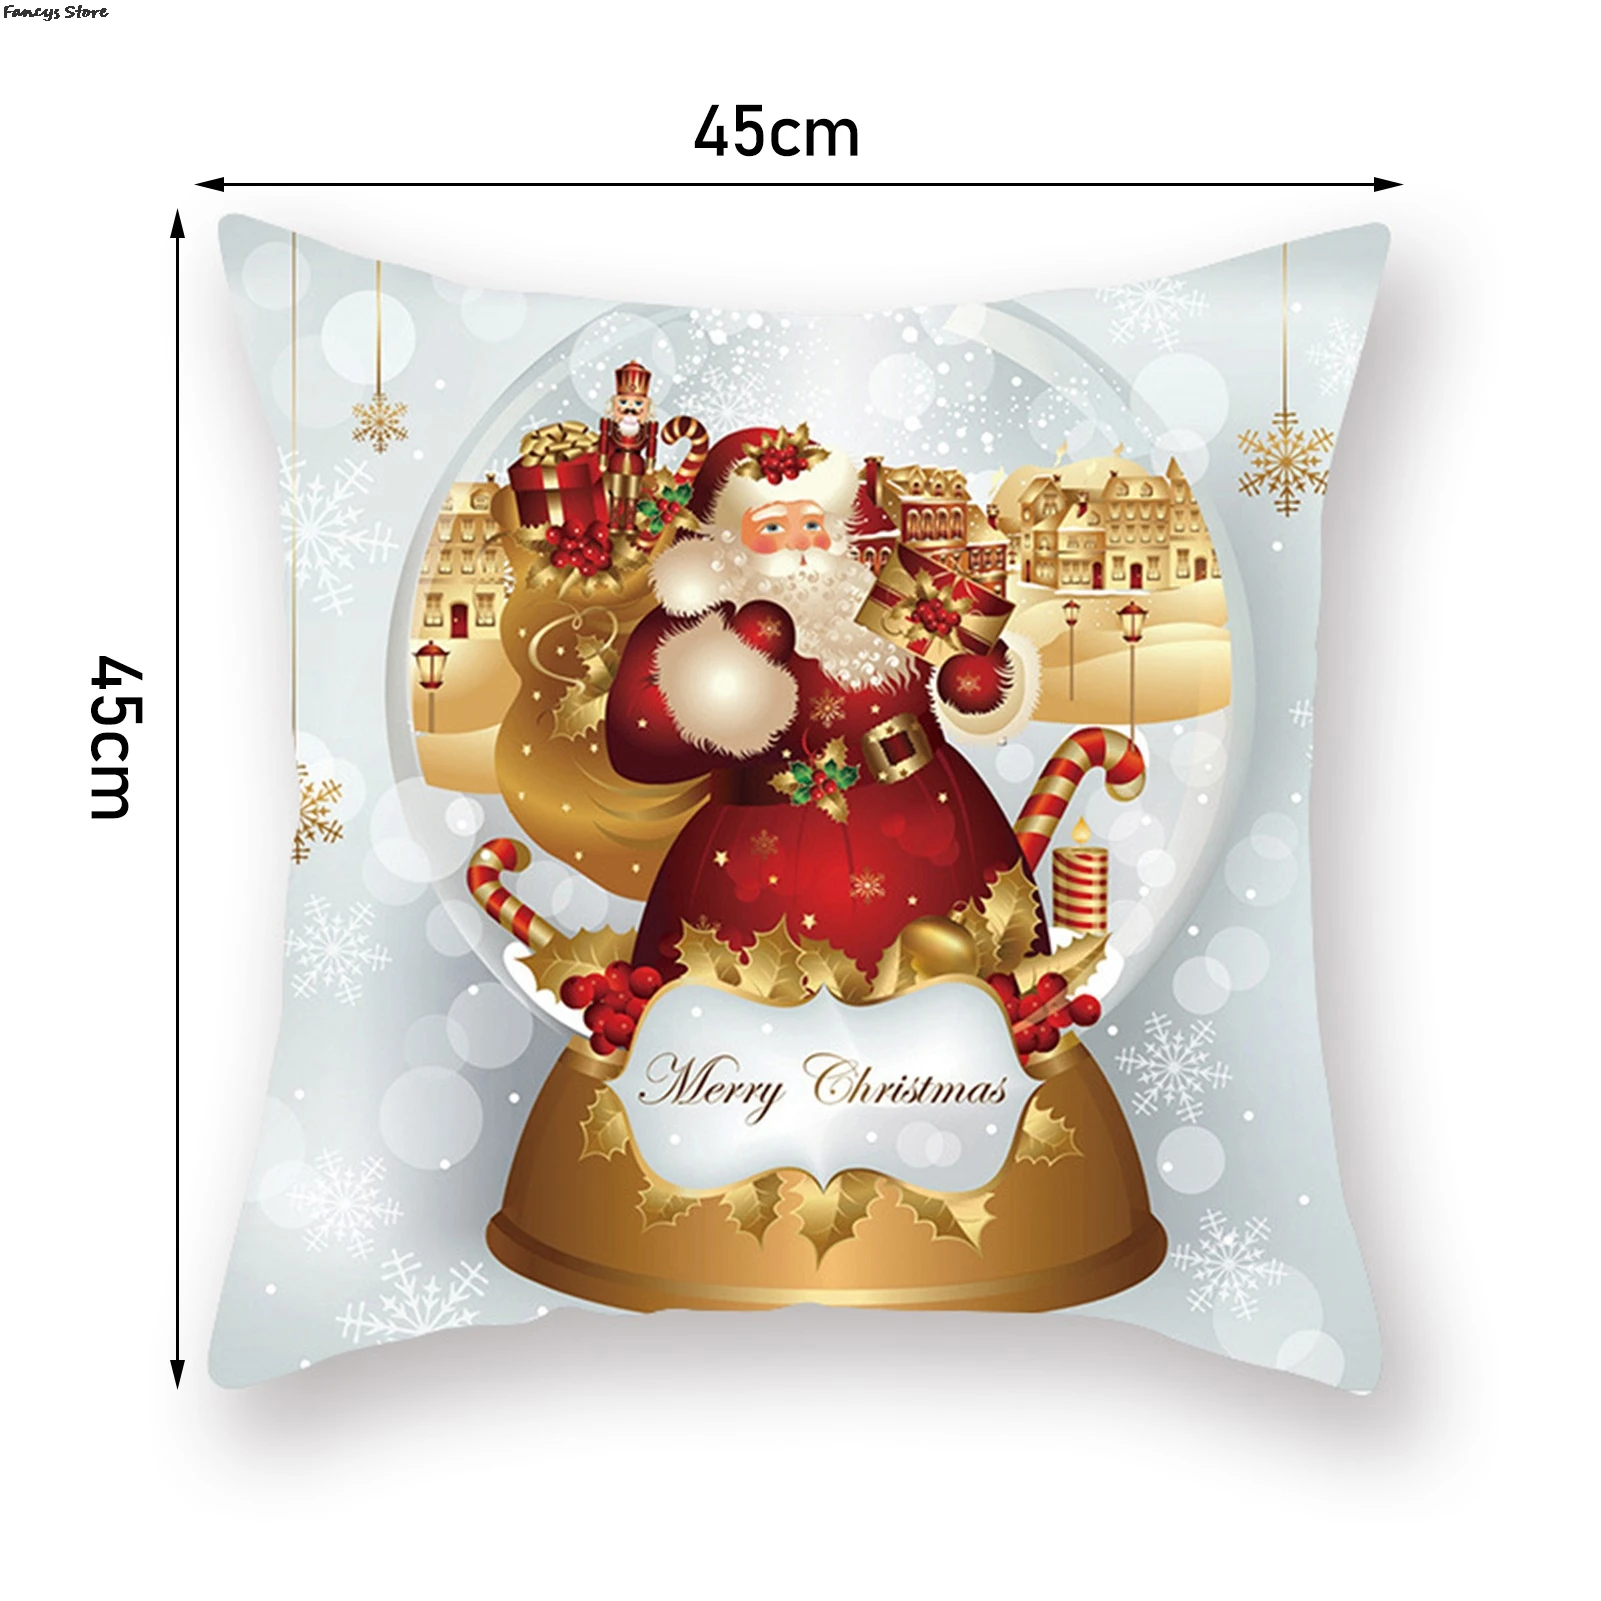 

Merry Christmas Cushion Covers 45x45 Cm Snowman Christmas Tree Santa Deer Printed Pillow Cover Sofa Decor Pillowcase For Couch